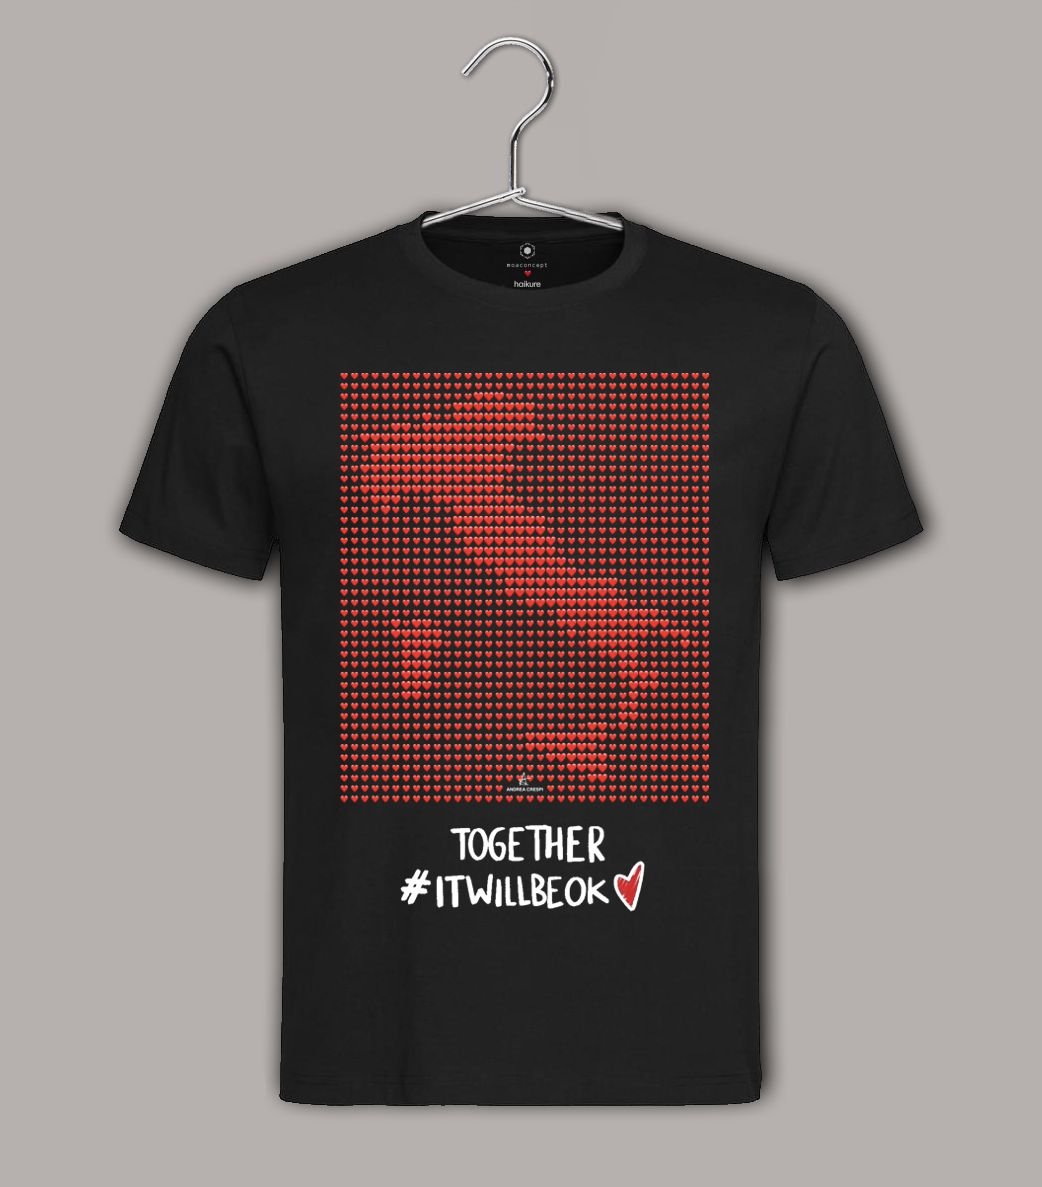 Together #itwillbeok black t-shirt